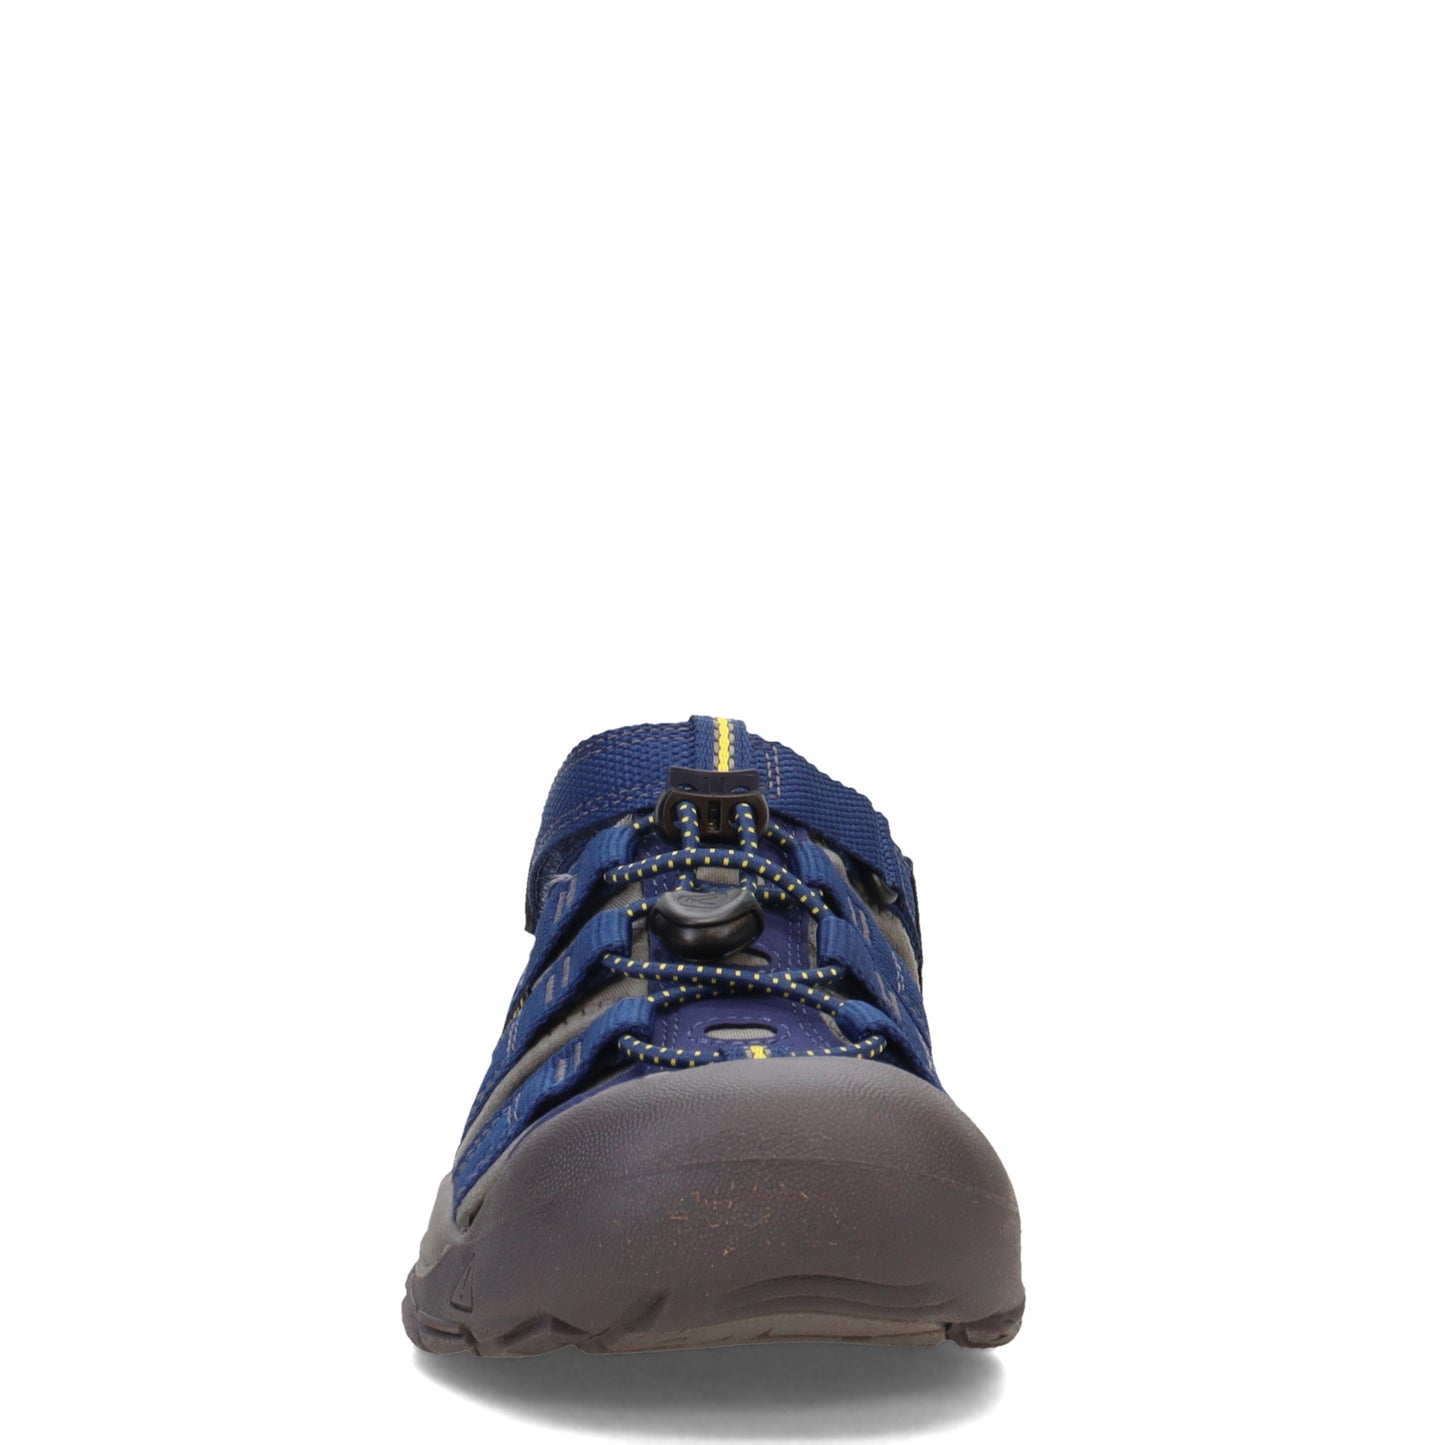 Peltz Shoes  Boy's Keen Newport H2 Waterproof Sandal - Little Kid & Big Kid Blue Depths/Gargoyle 1009962